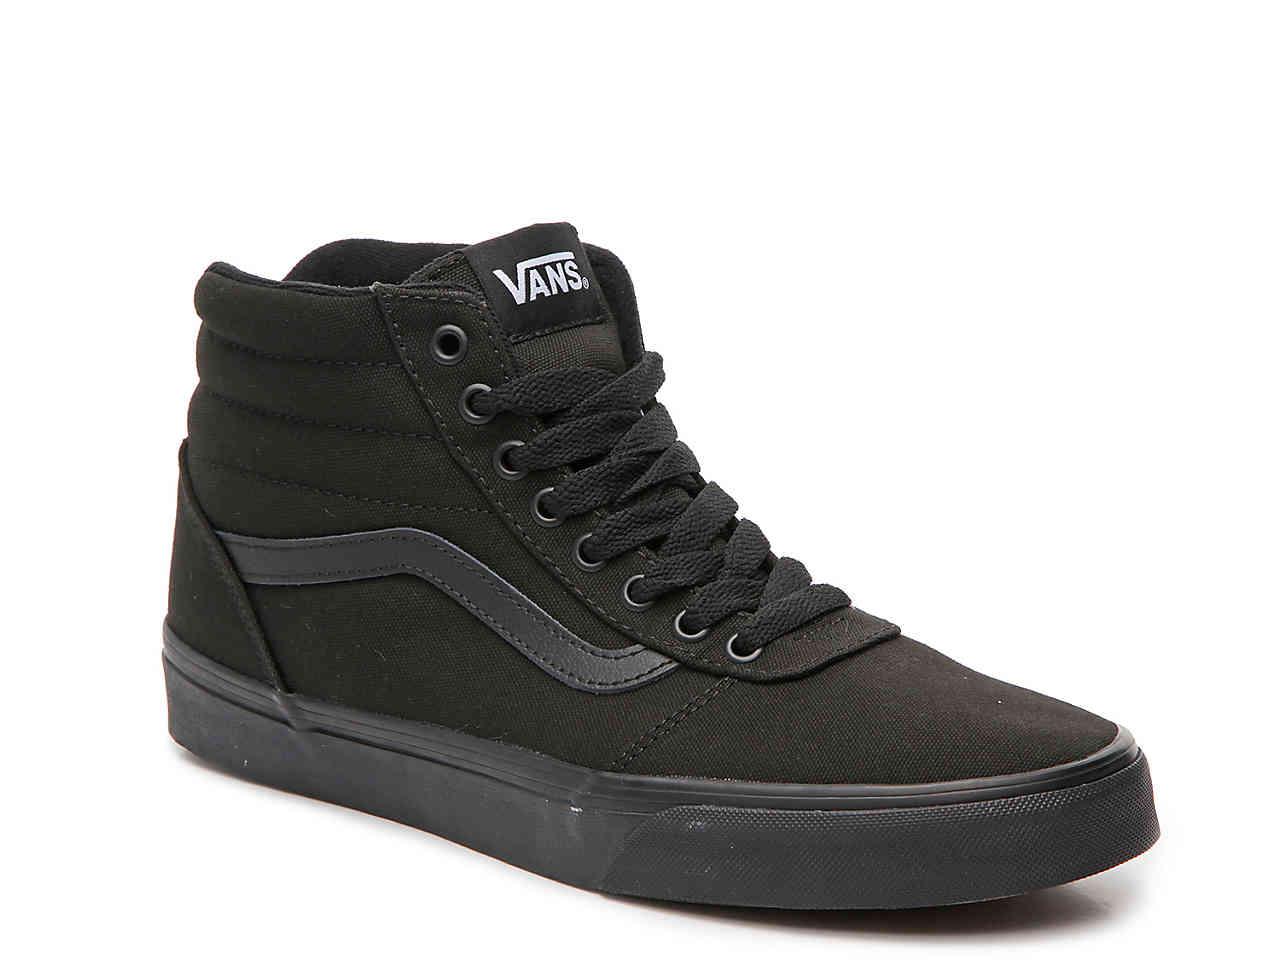 Vans Ward Hi Canvas High-top Sneaker in Black for Men - Lyst